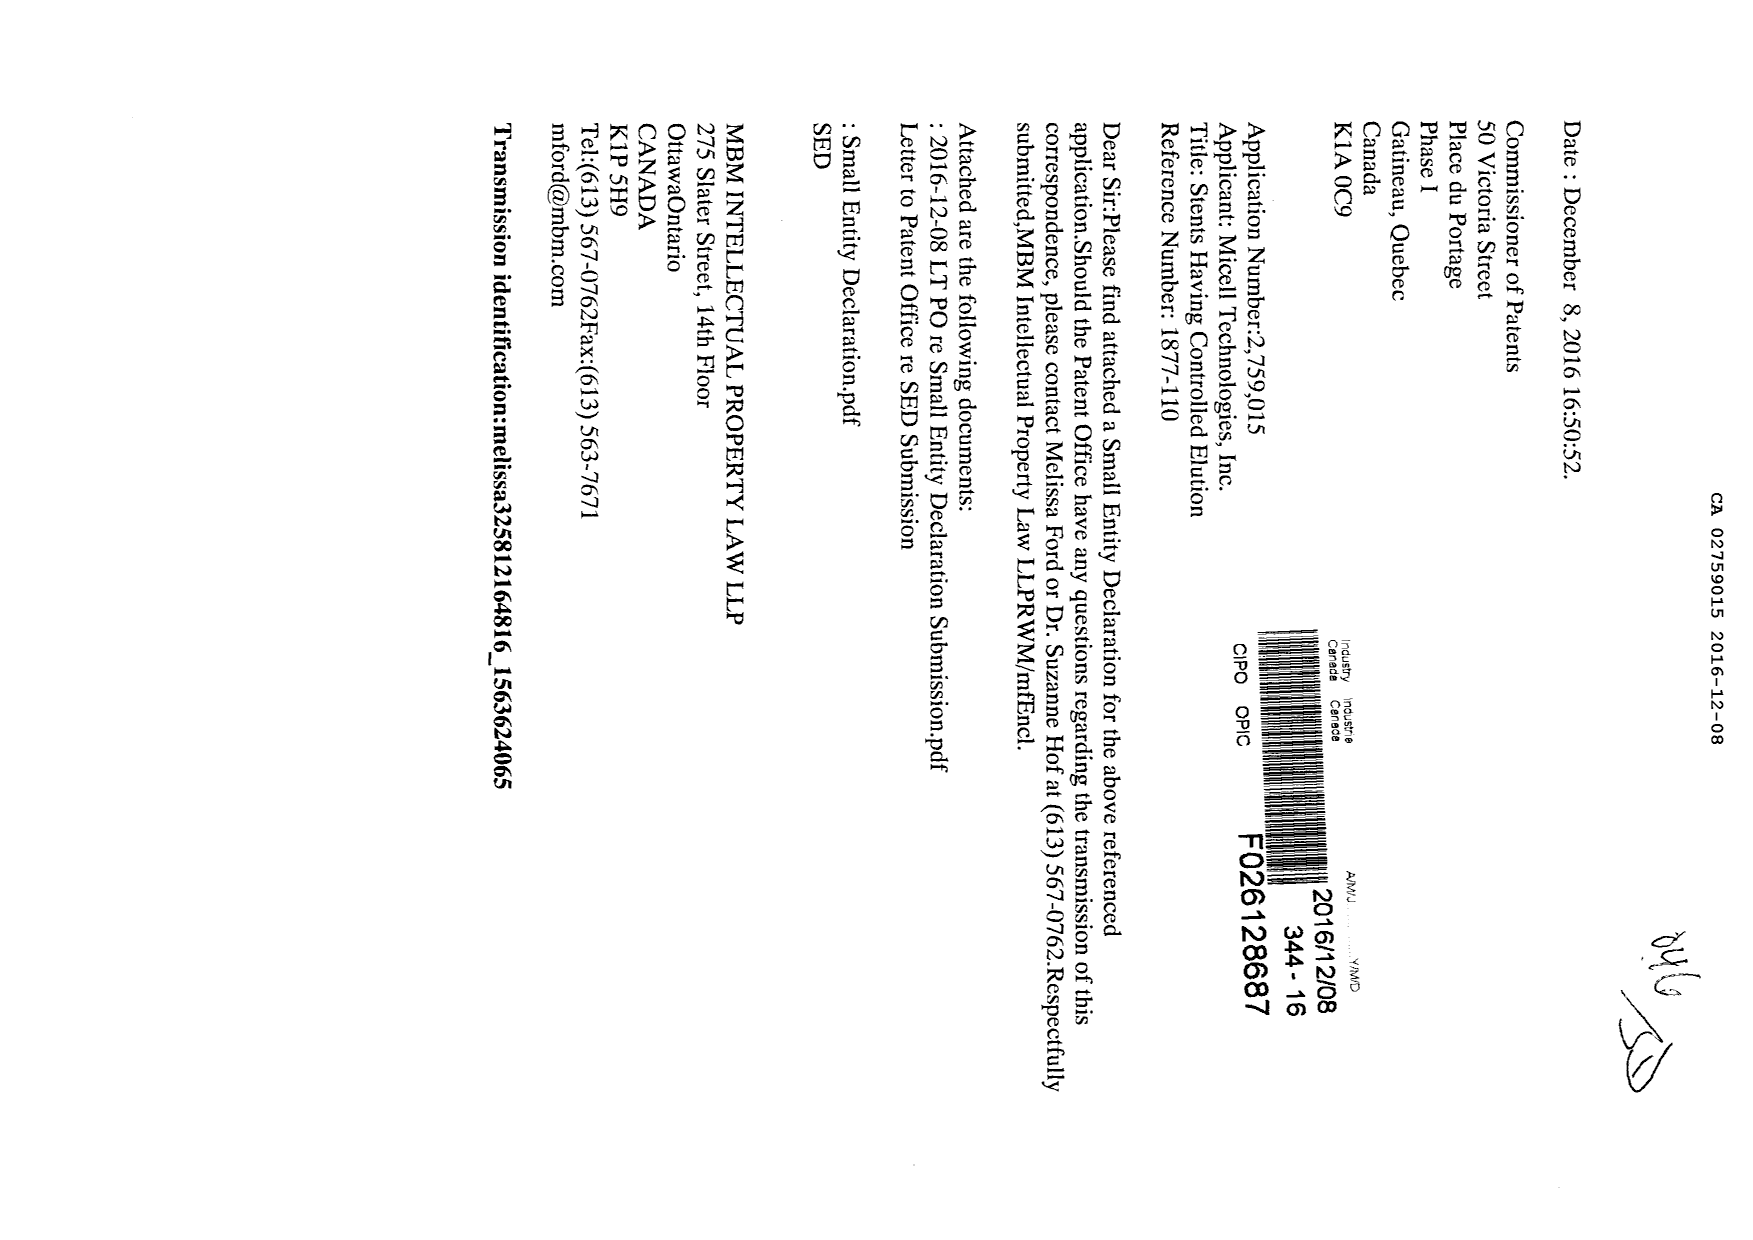 Canadian Patent Document 2759015. Correspondence 20151208. Image 1 of 3